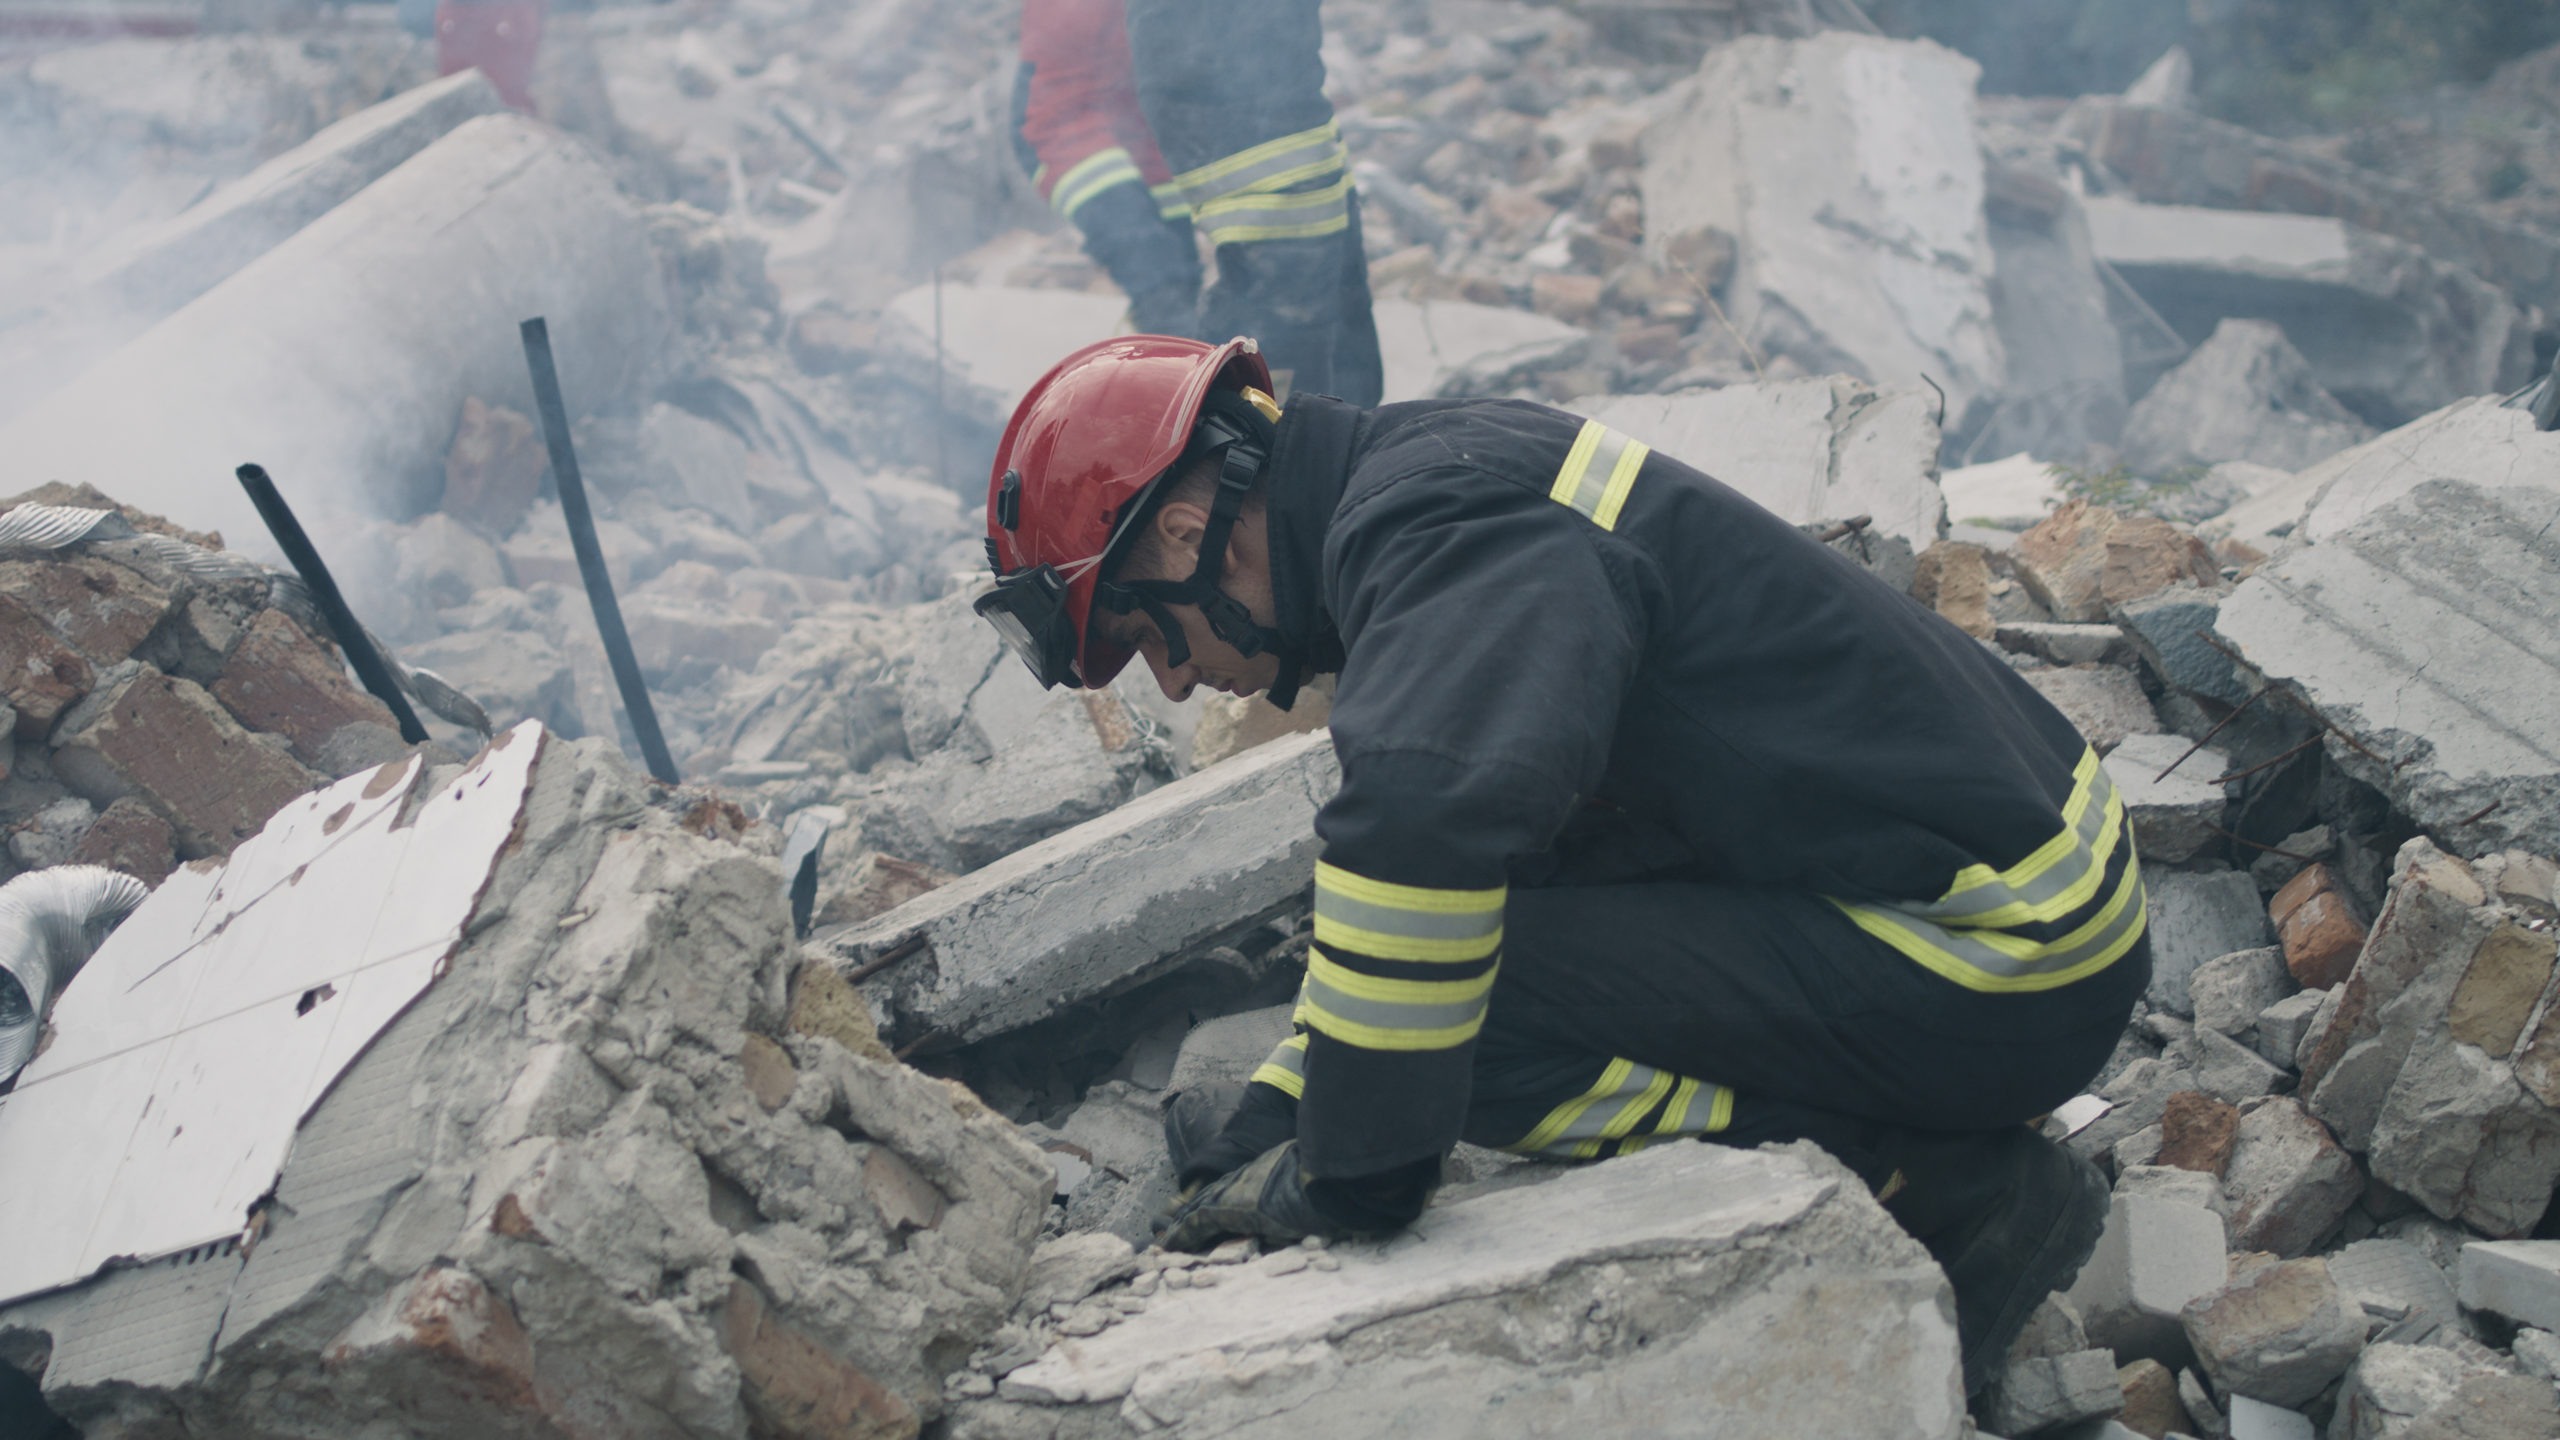 Fireman slaving civilians of a building ruins